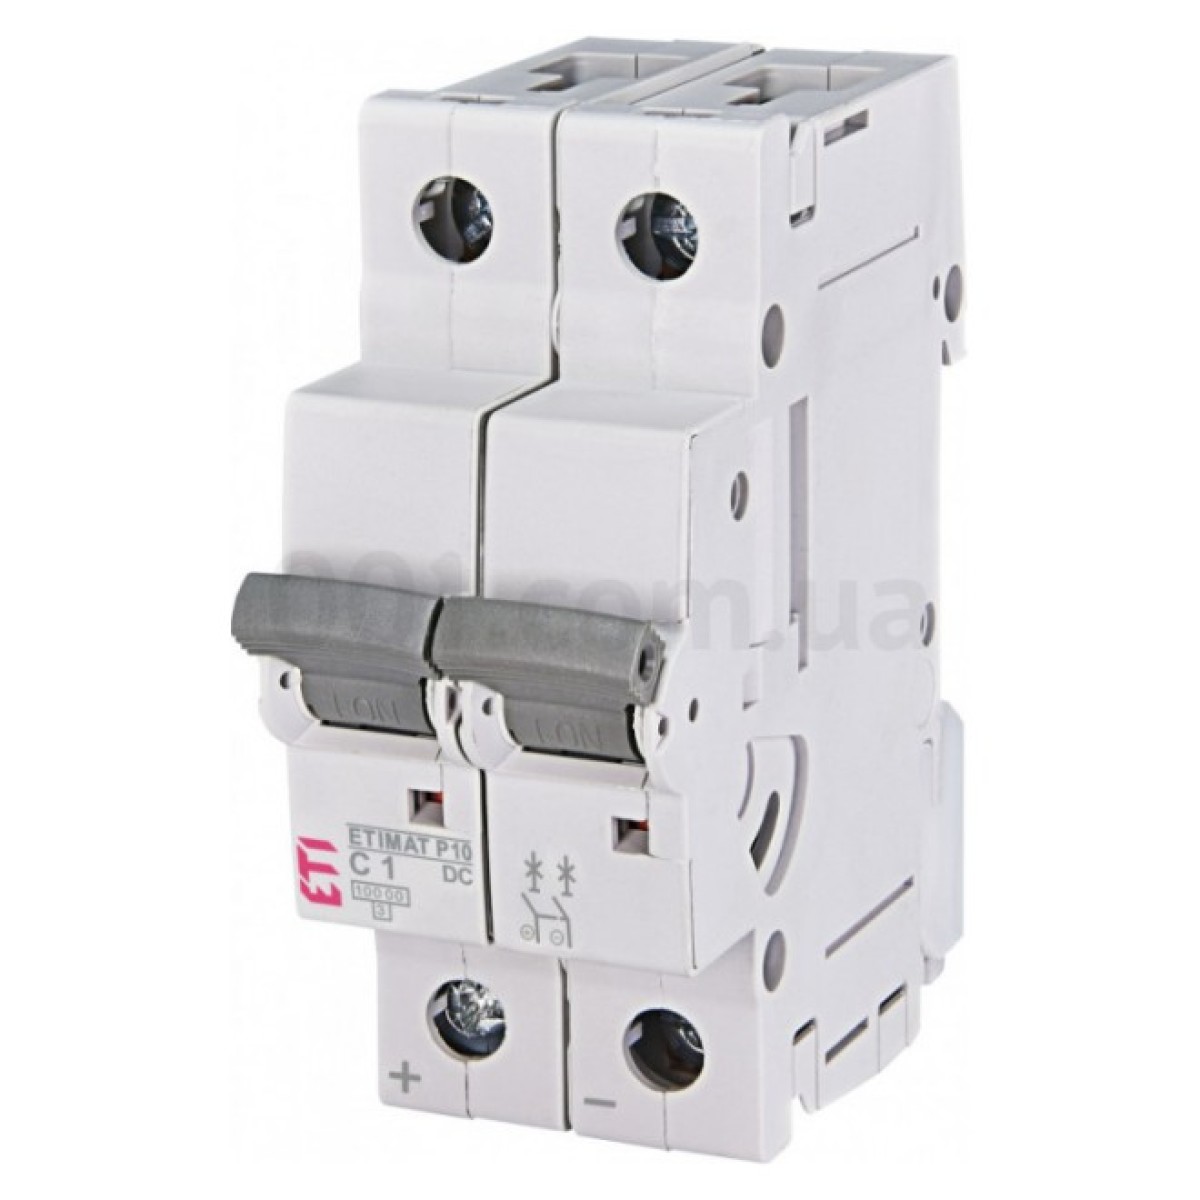 Автоматичний вимикач ETIMAT P10 DC (10кА) 2P 1 А хар-ка C, ETI 256_256.jpg